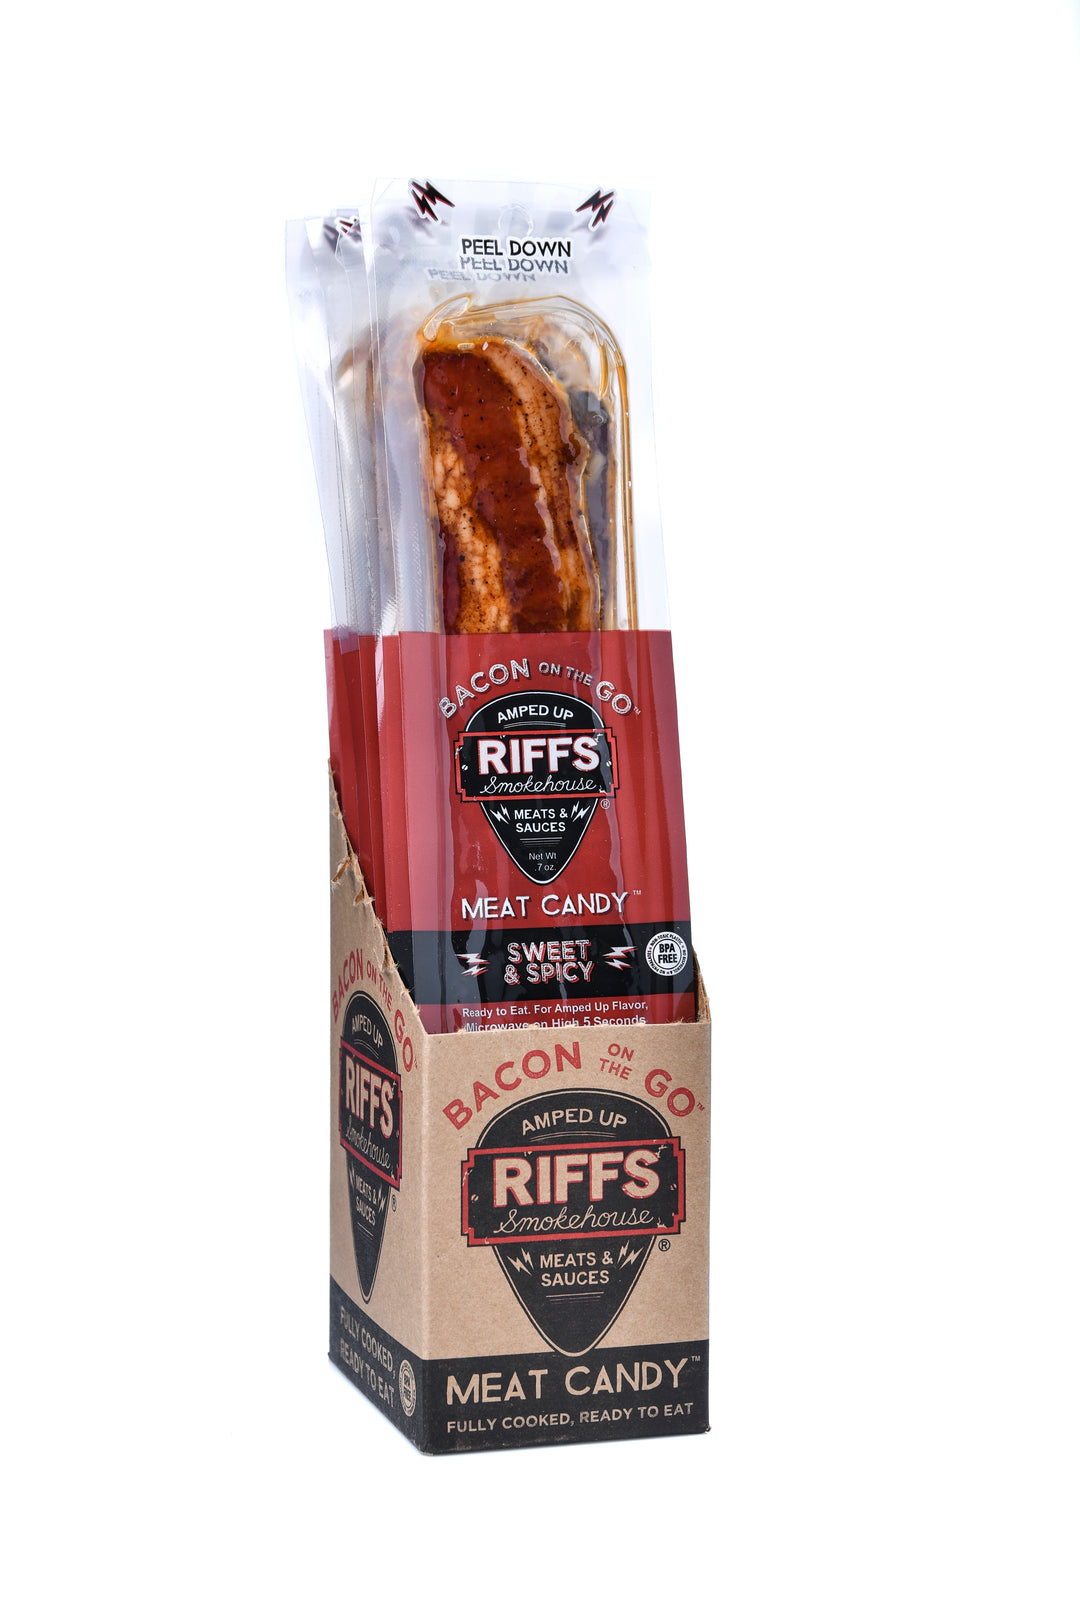 Riff's Sweet & Spicy Case-0.7 oz.-12/Box-12/Case